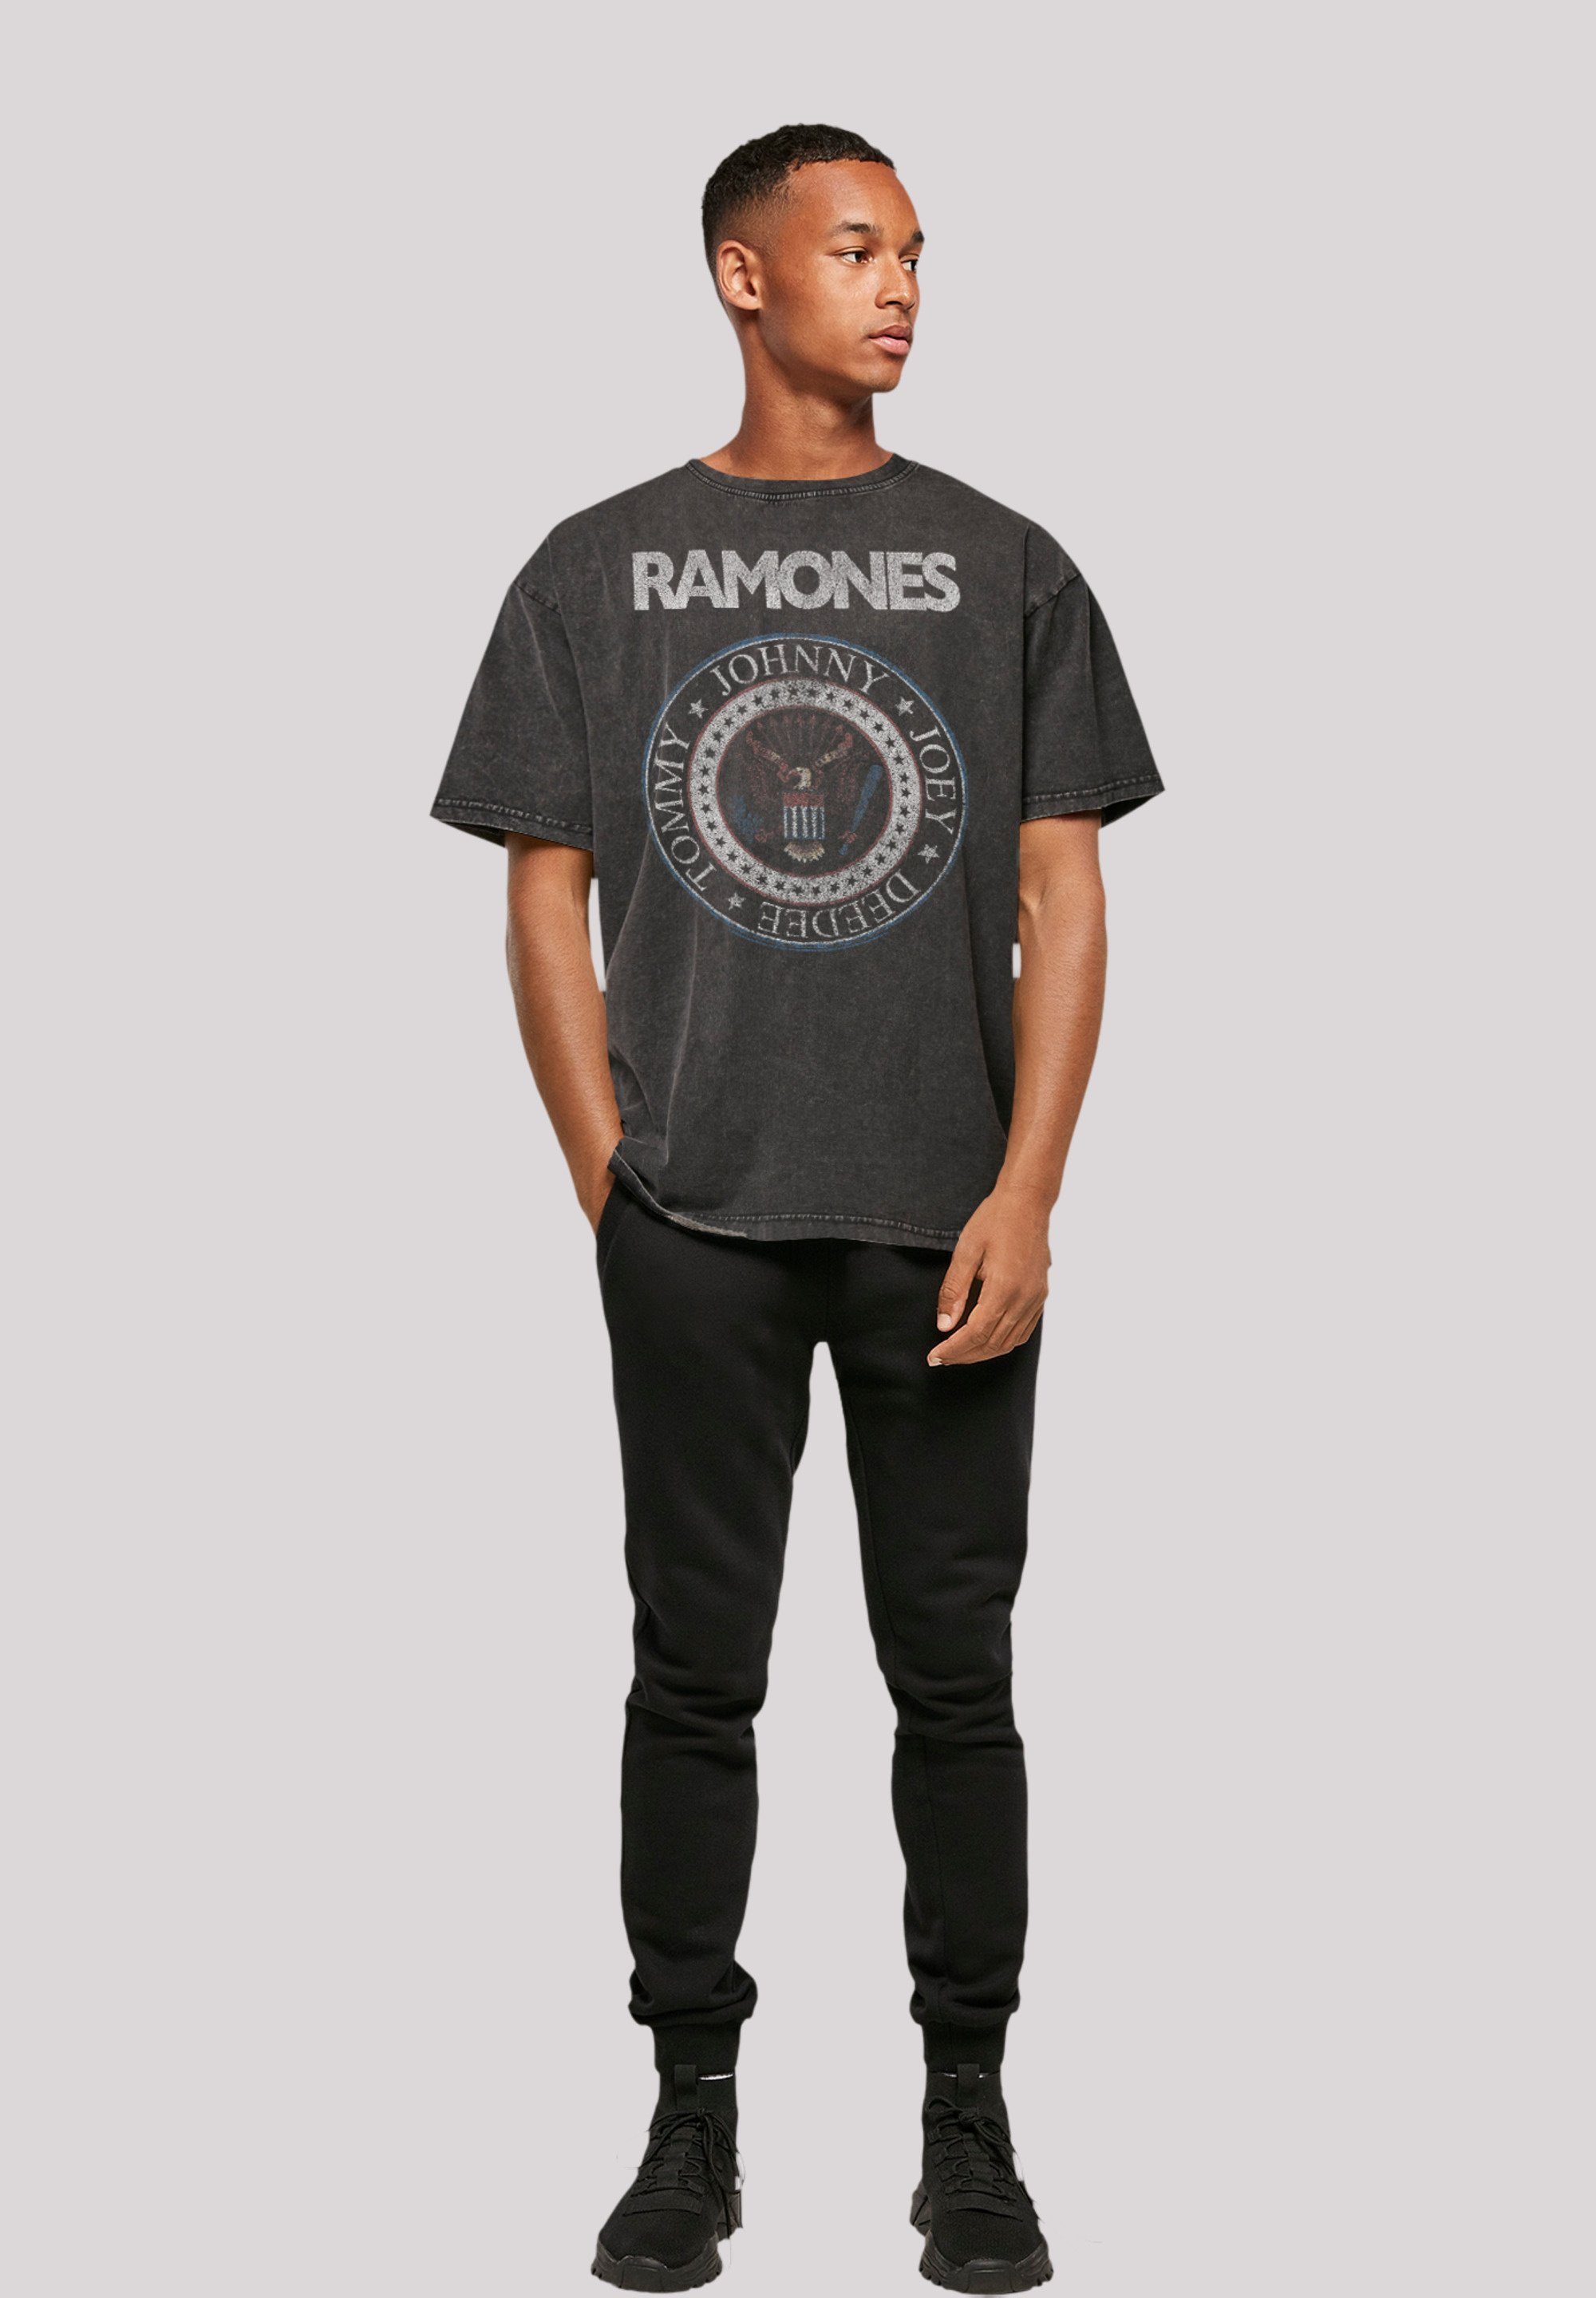 Musik Ramones Qualität, And Rock T-Shirt White Premium F4NT4STIC Band, Seal Red Band Rock-Musik schwarz